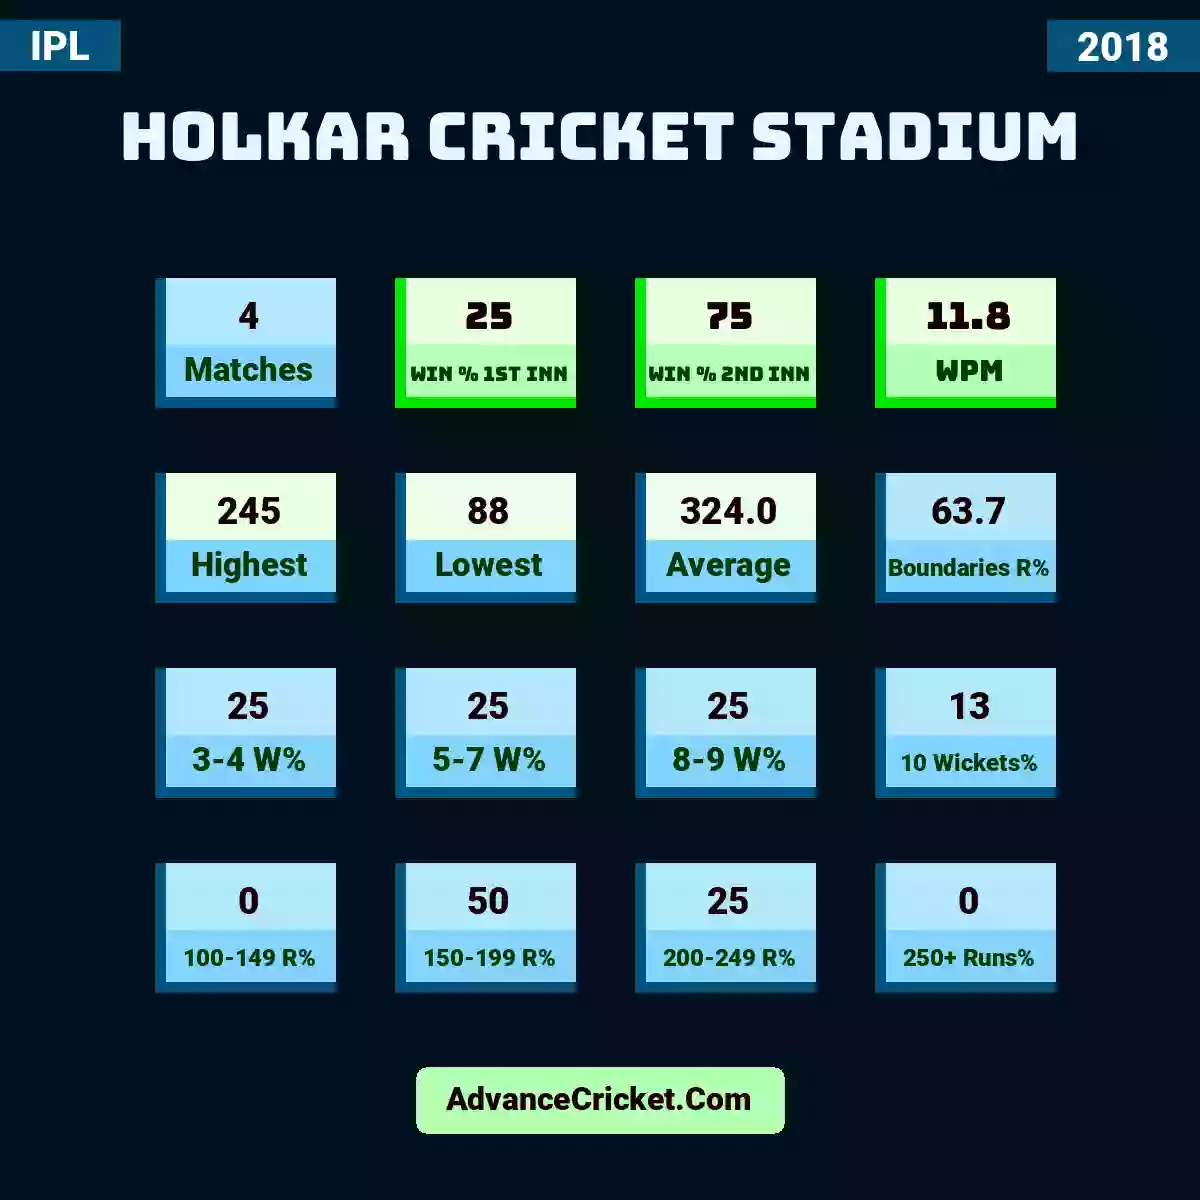 Image showing Holkar Cricket Stadium with Matches: 4, Win % 1st Inn: 25, Win % 2nd Inn: 75, WPM: 11.8, Highest: 245, Lowest: 88, Average: 324.0, Boundaries R%: 63.7, 3-4 W%: 25, 5-7 W%: 25, 8-9 W%: 25, 10 Wickets%: 13, 100-149 R%: 0, 150-199 R%: 50, 200-249 R%: 25, 250+ Runs%: 0.